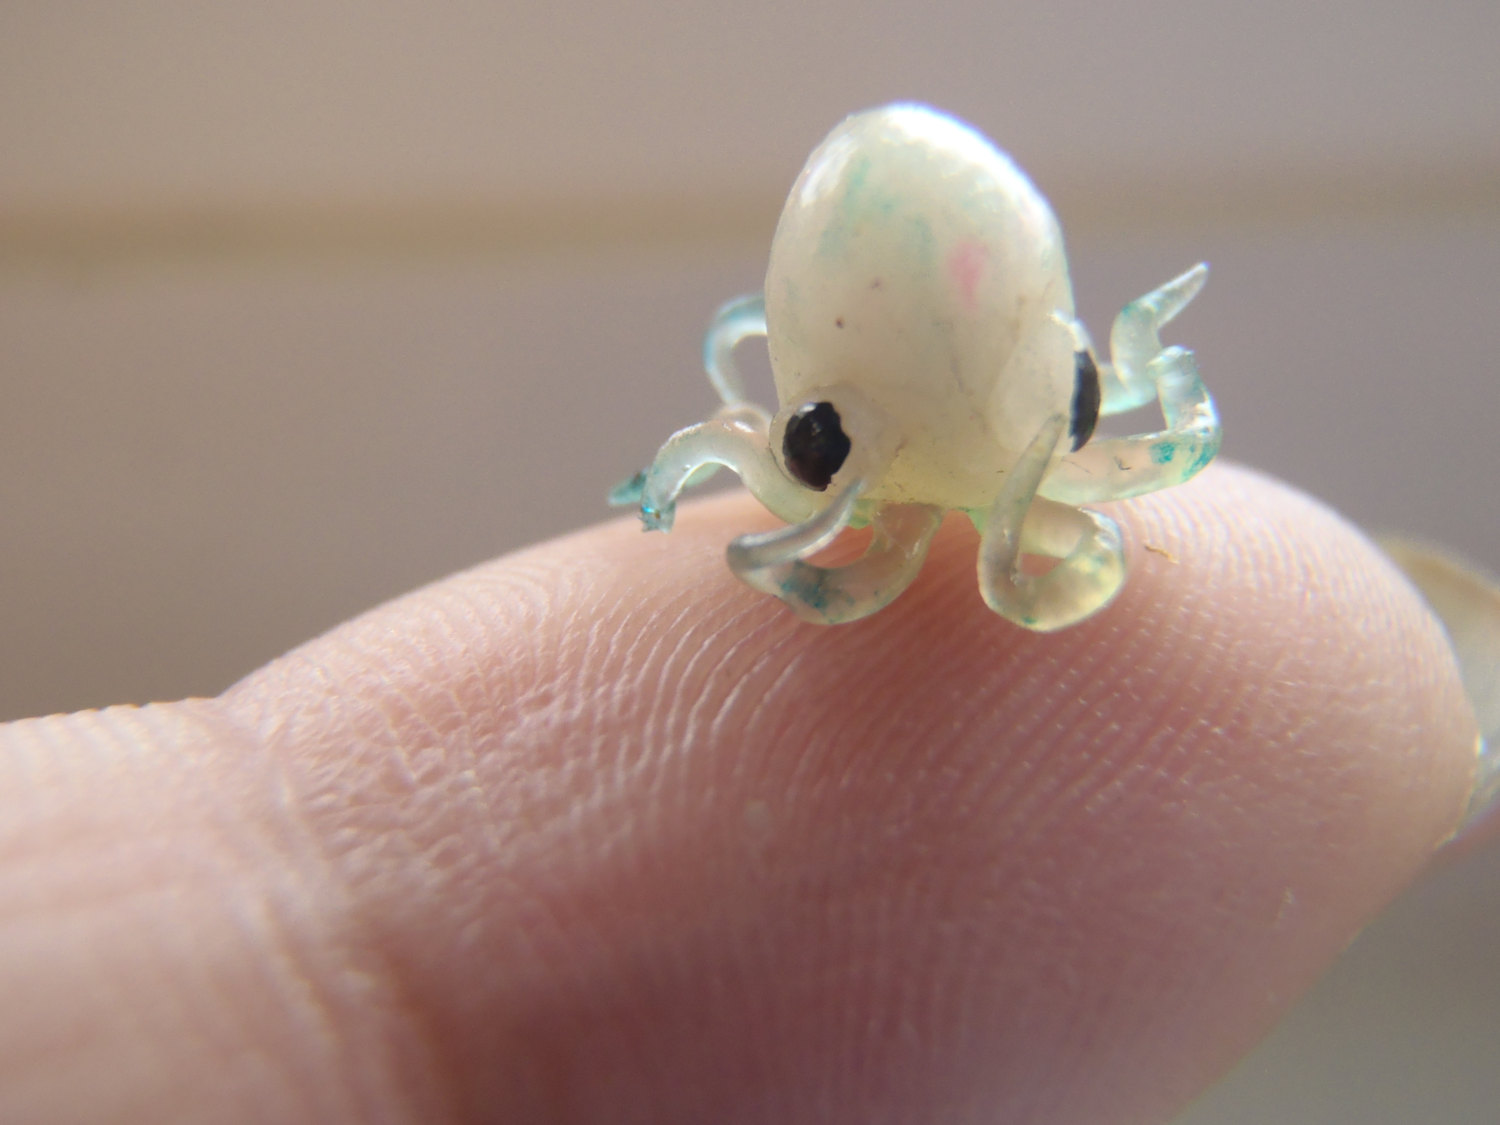 A tiny newborn octopus.